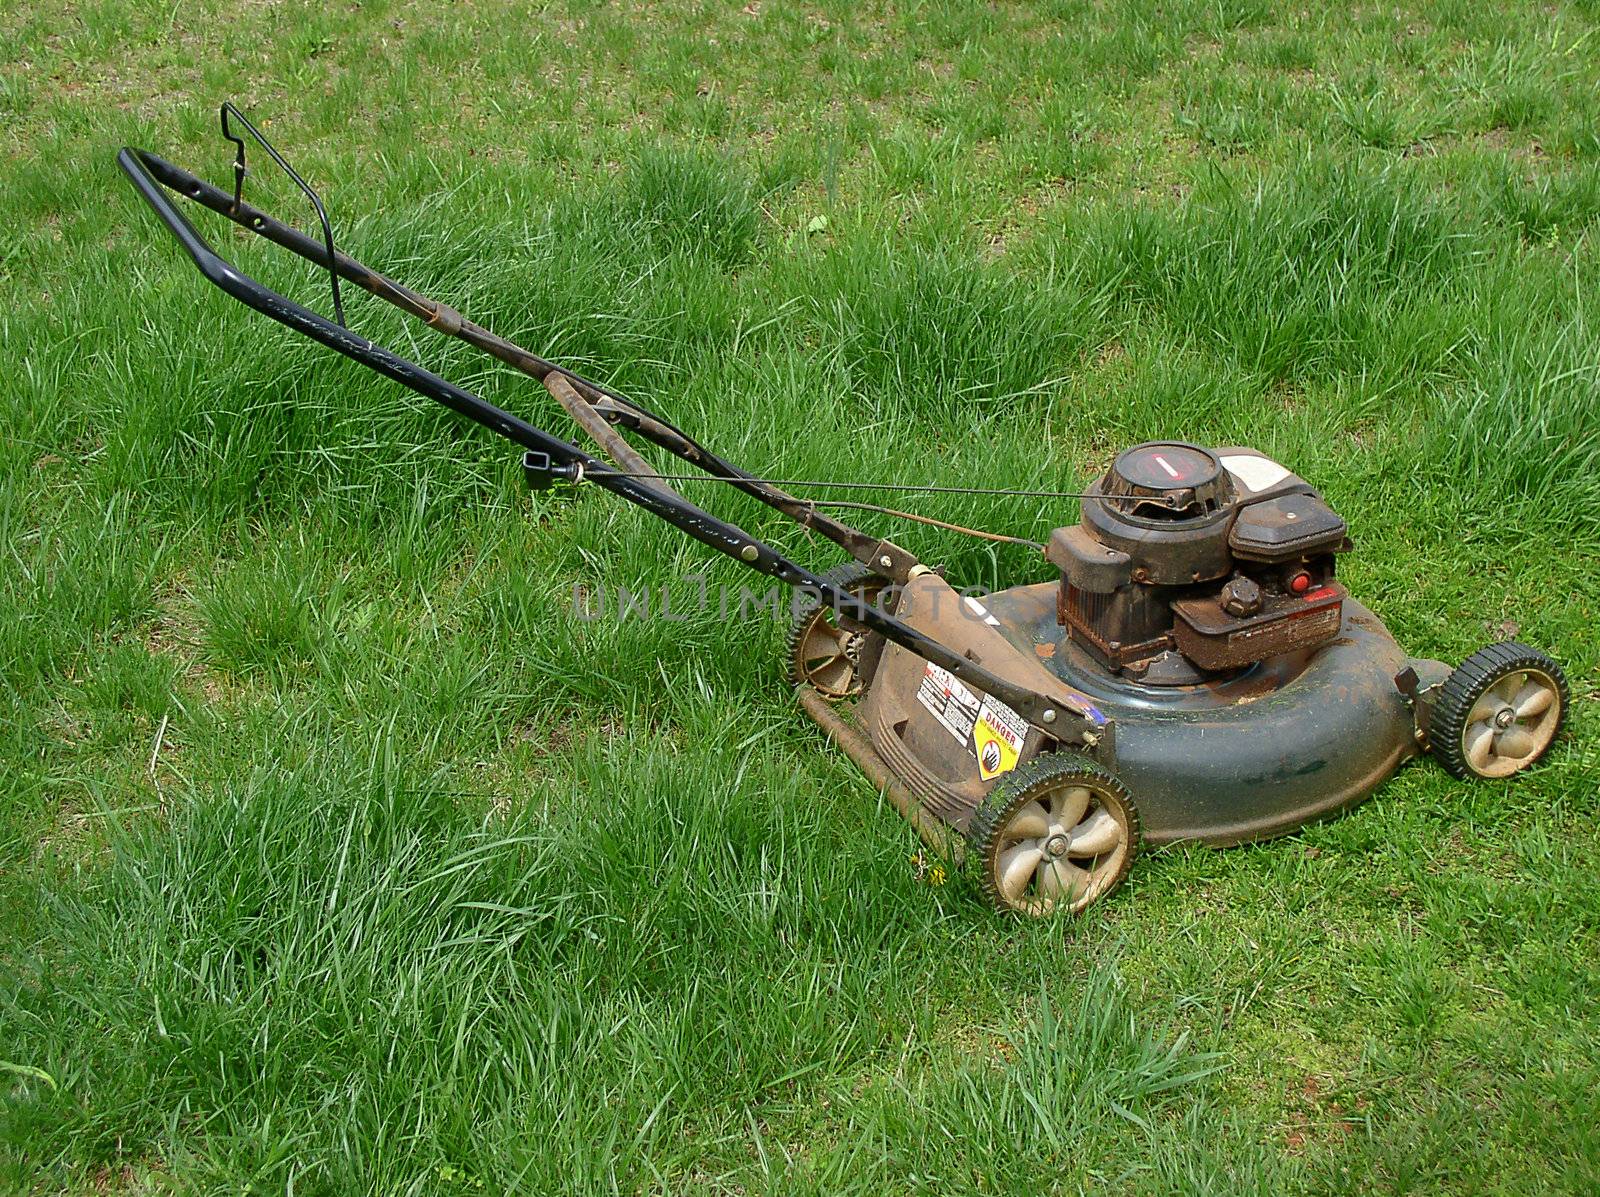 Lawnmower on long grass by paulglover